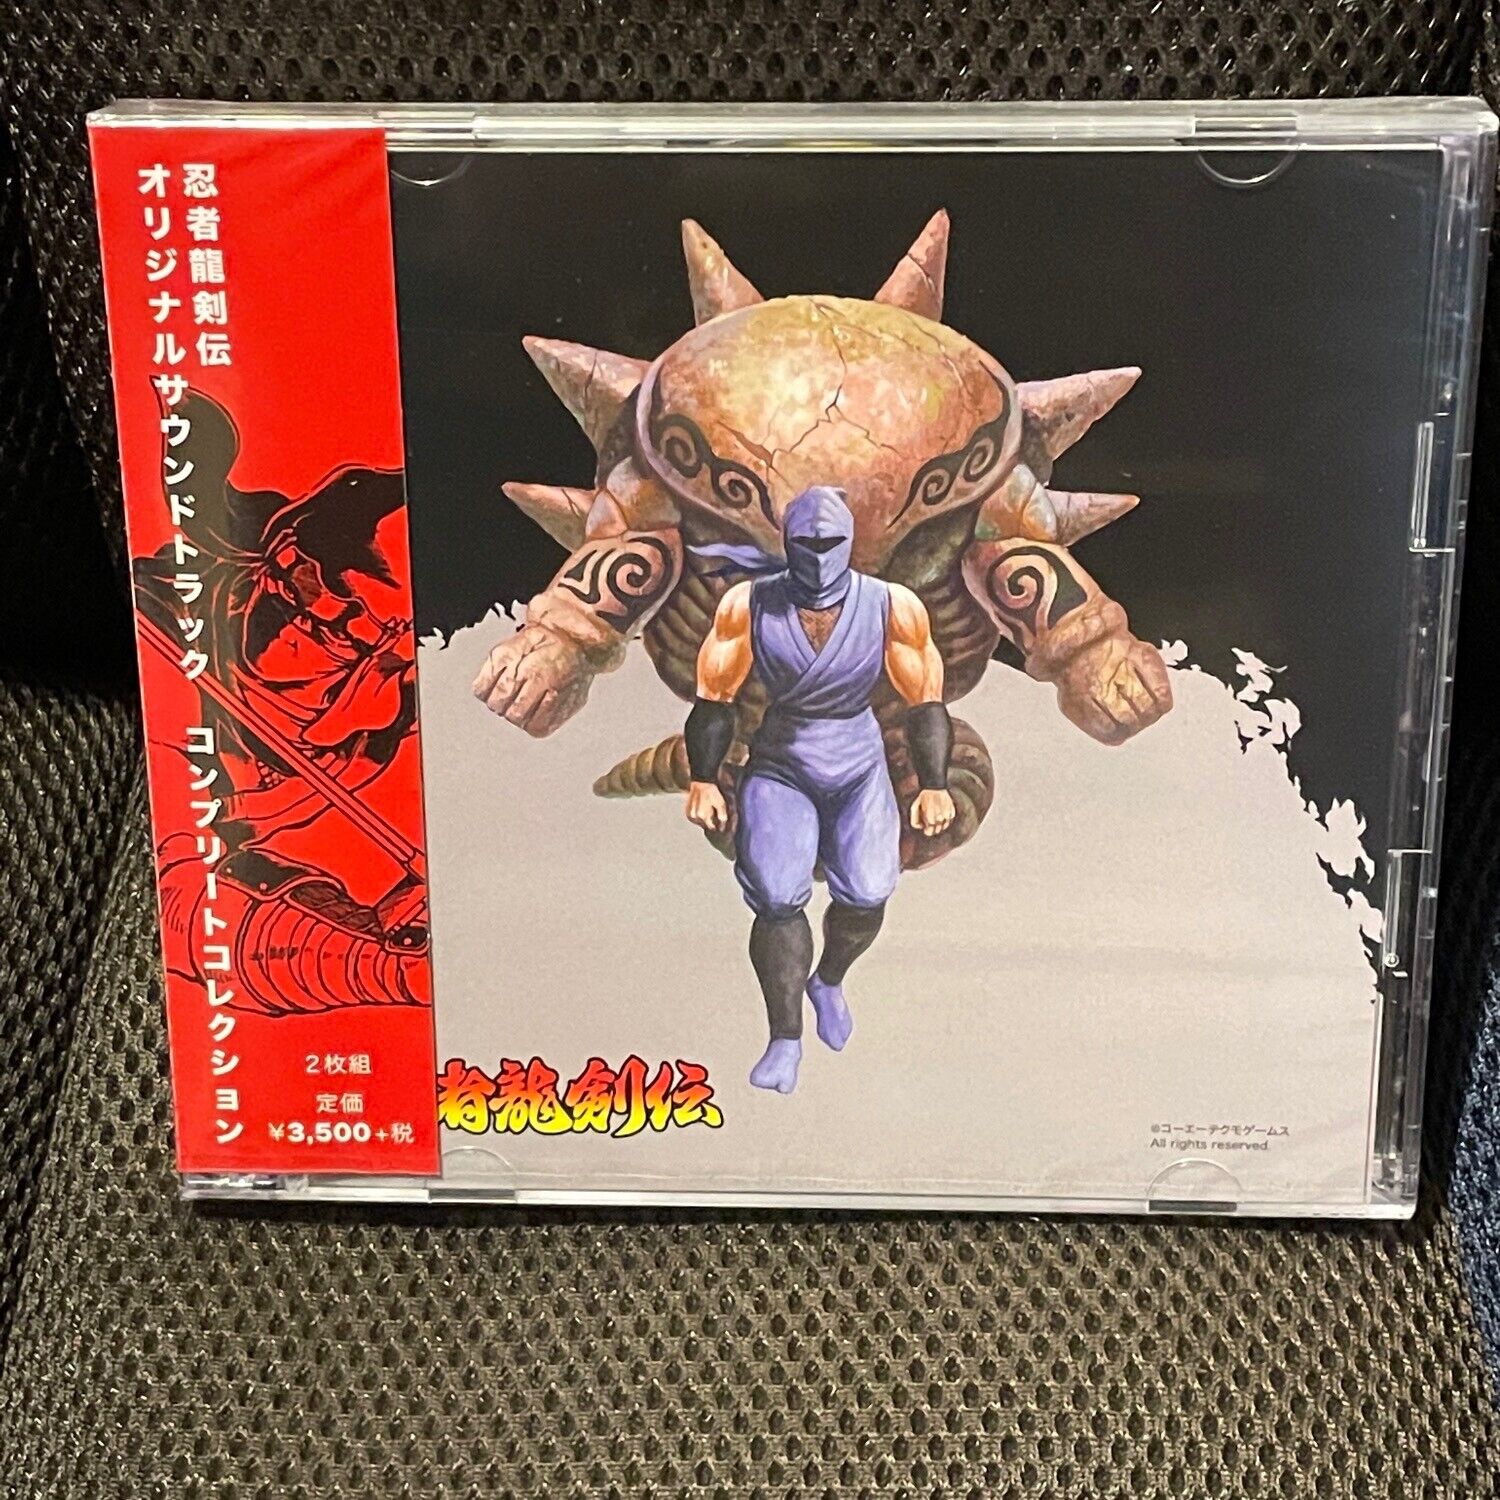 NINJA GAIDEN Original Soundtrack CD Complete Collection from Japan Ryukenden